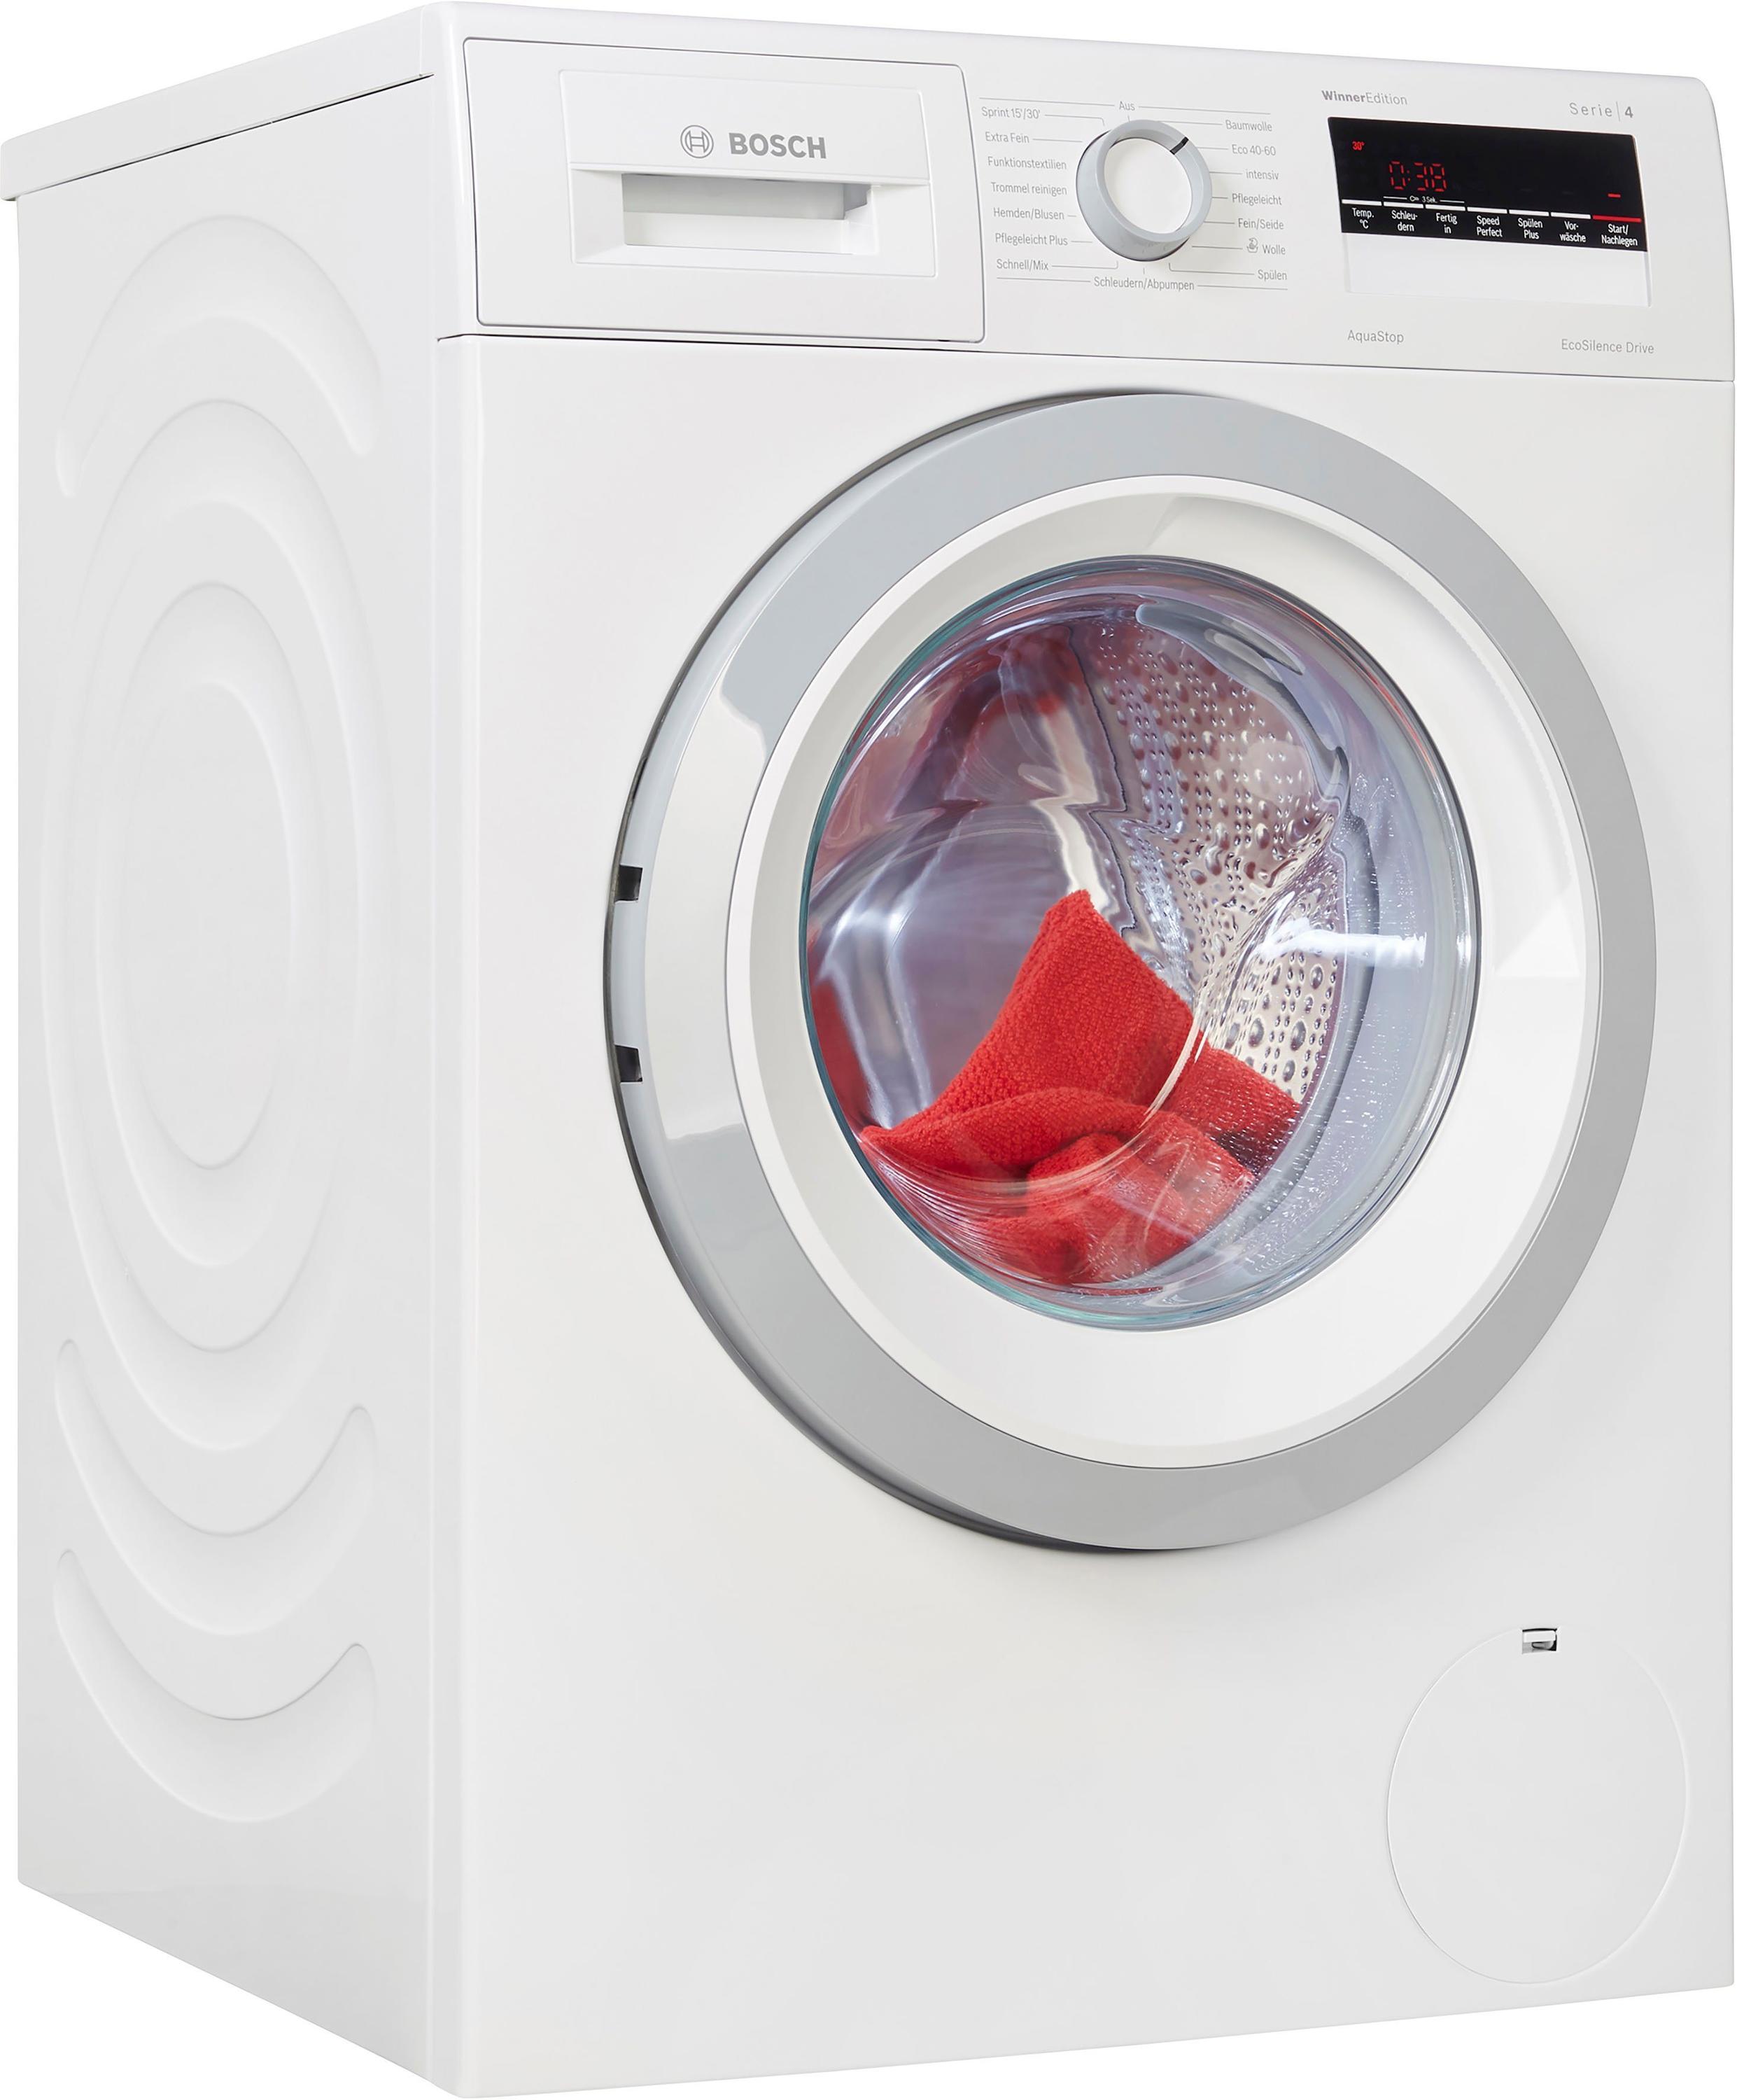 Bosch WAN28KWIN Waschmaschine